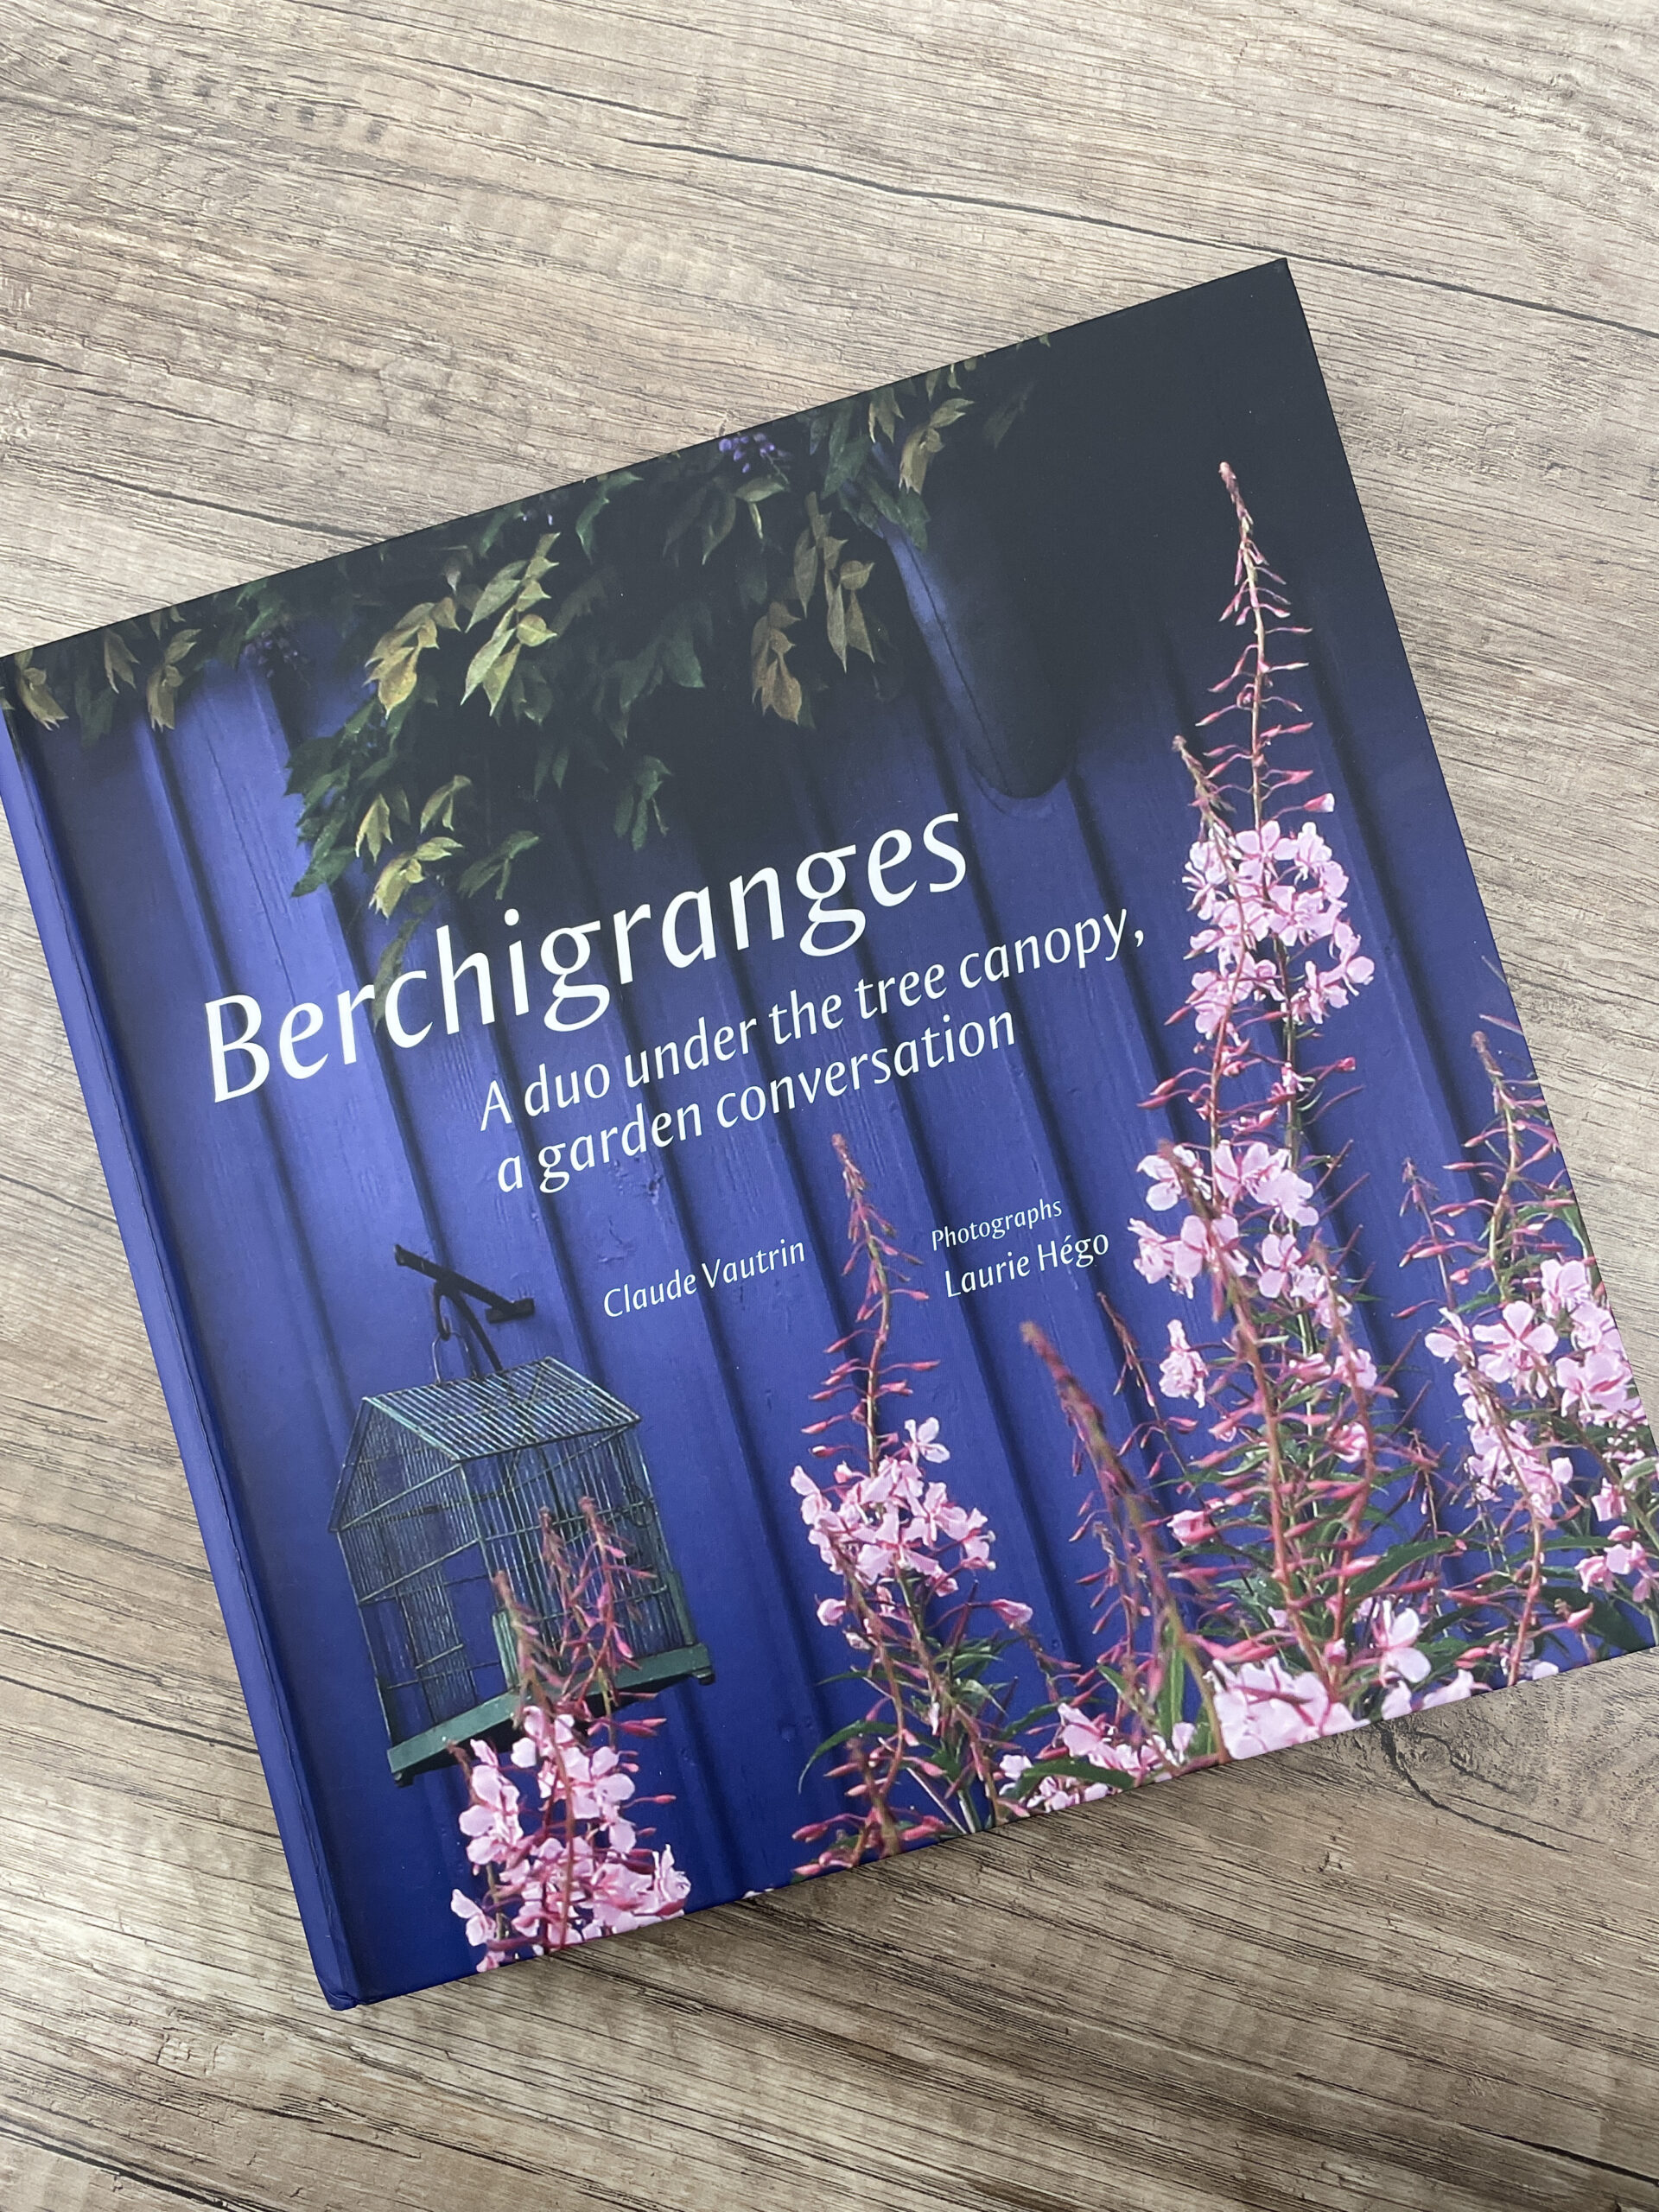 Intreegue Garden of the Month: A Romantic Journey Through Jardin de Berchigranges